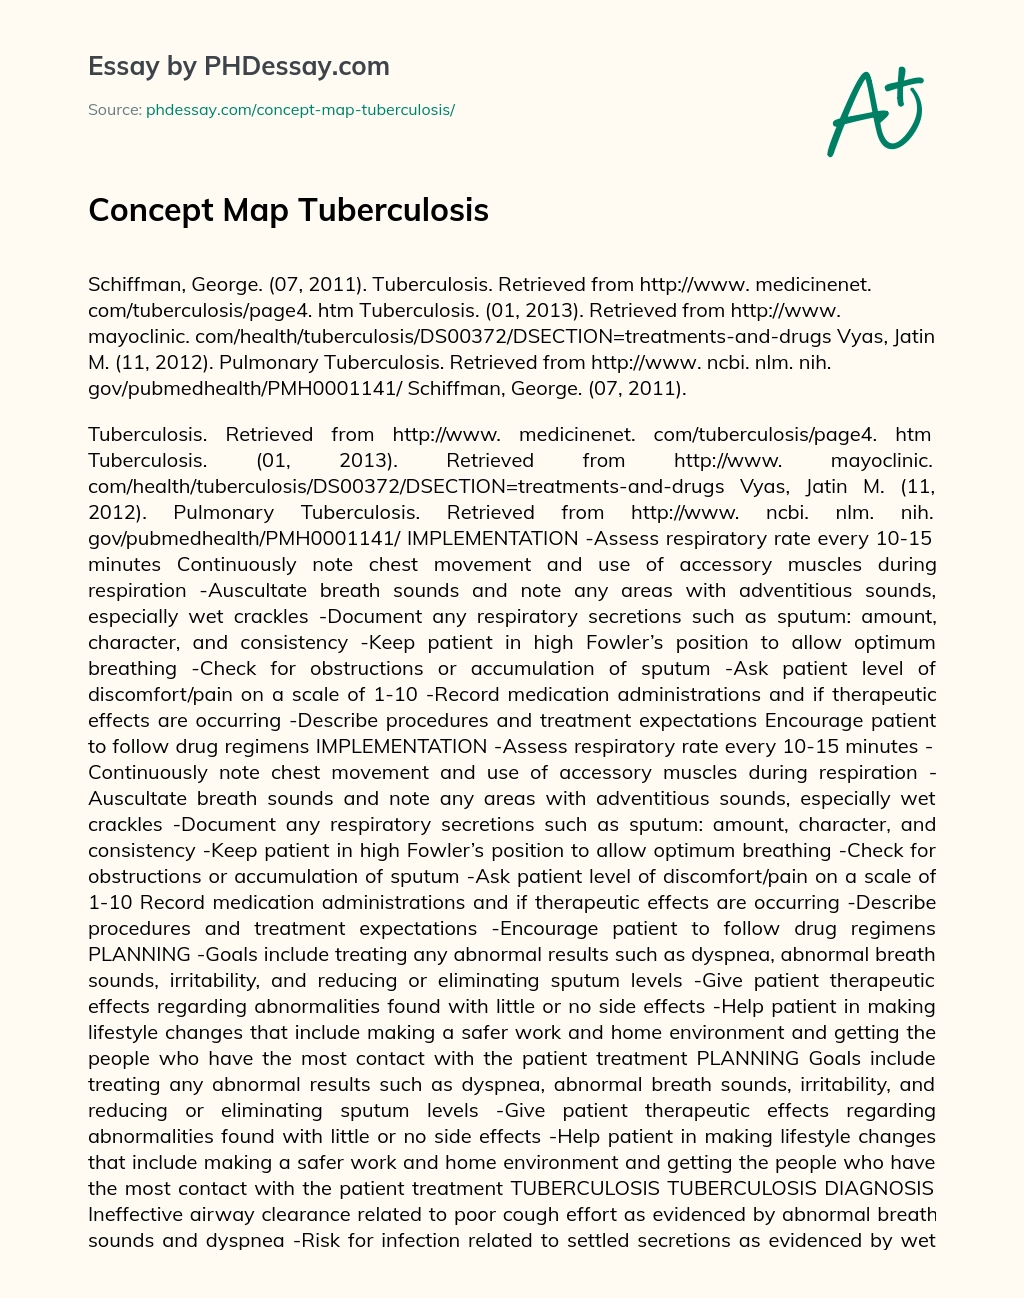 Concept Map Tuberculosis essay